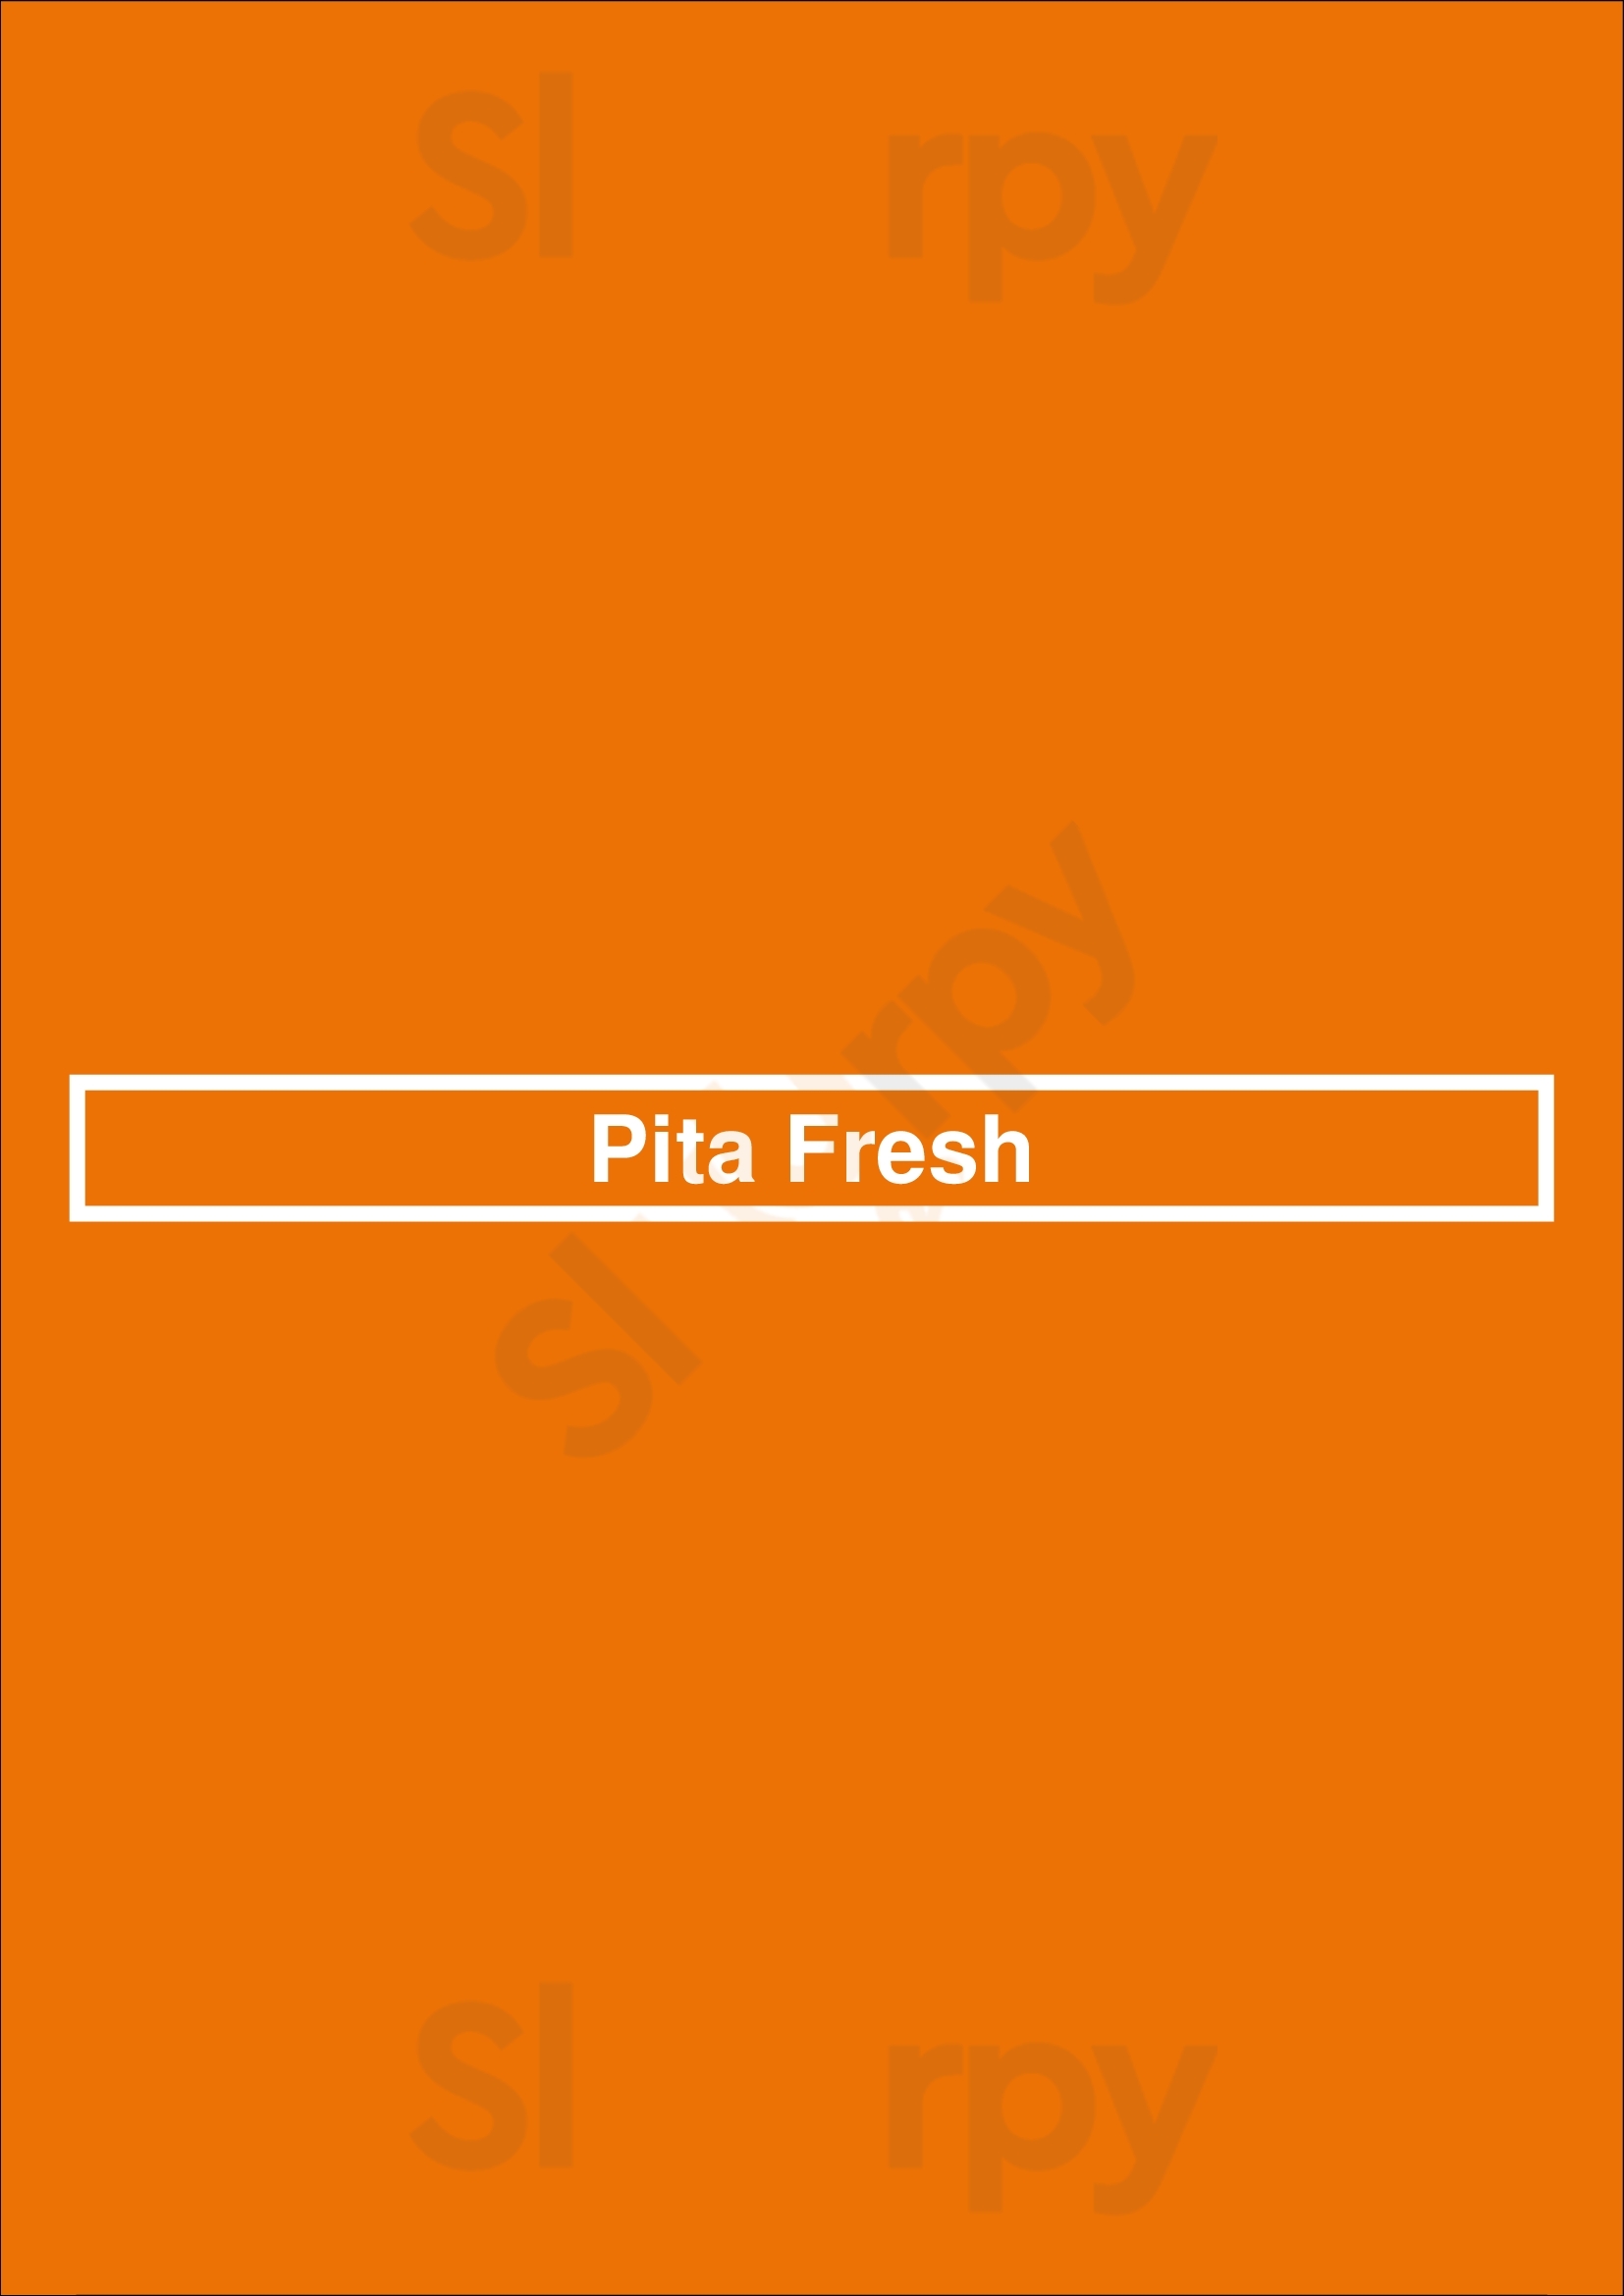 Pita Fresh Denver Menu - 1